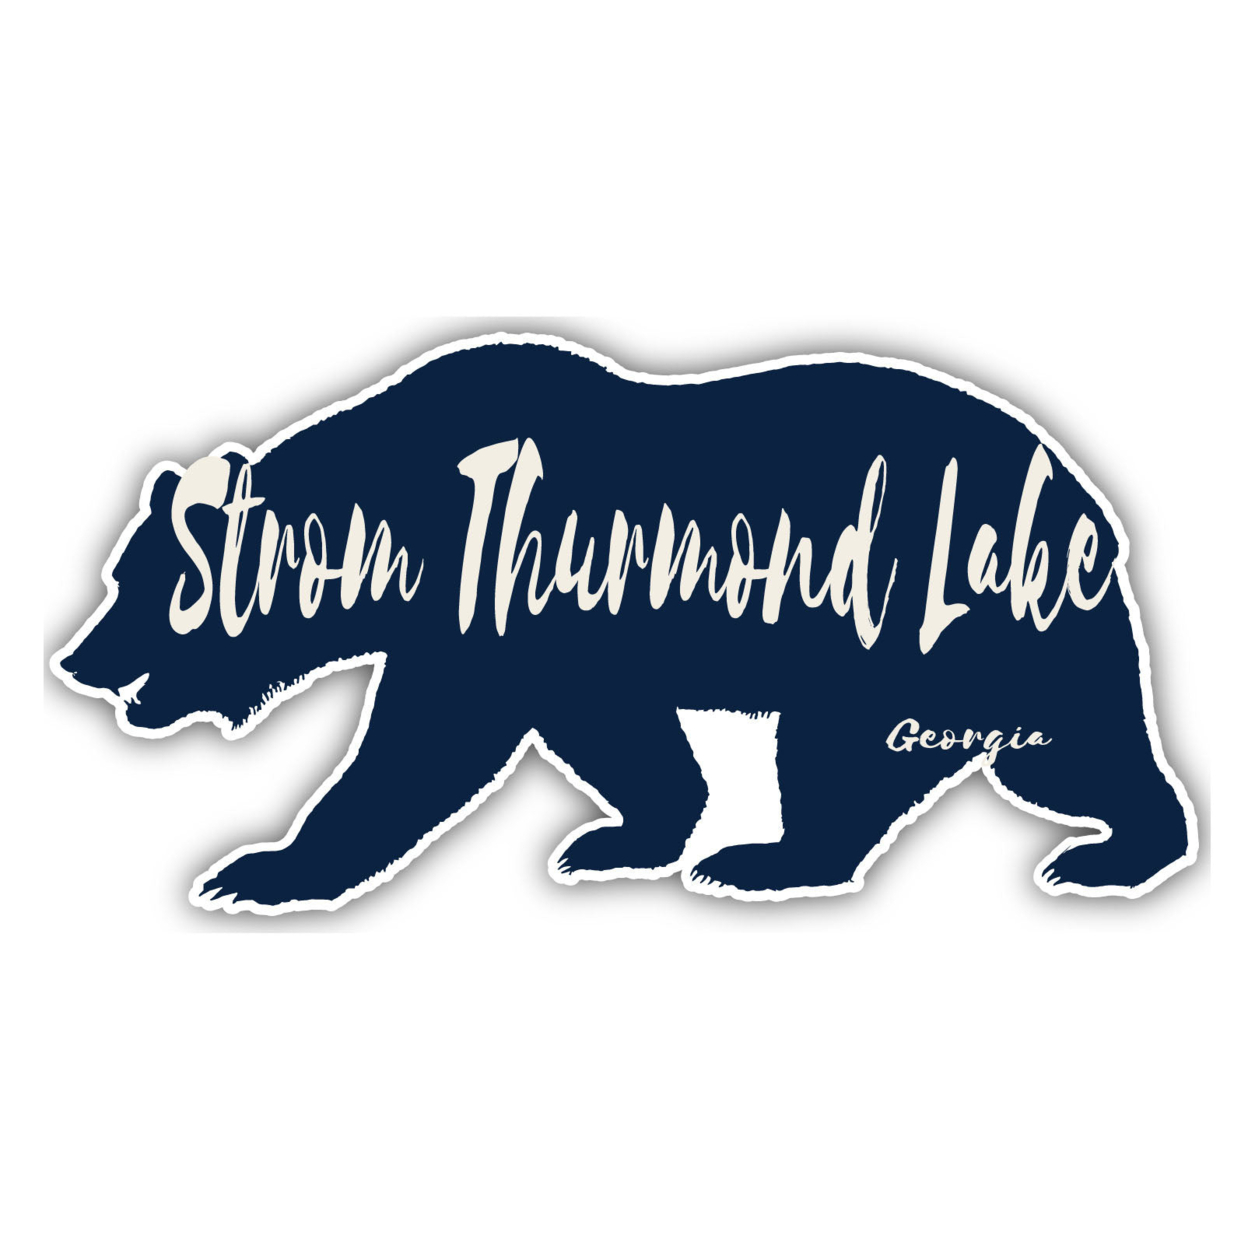 Strom Thurmond Lake Georgia Souvenir Decorative Stickers (Choose Theme And Size) - Single Unit, 4-Inch, Tent